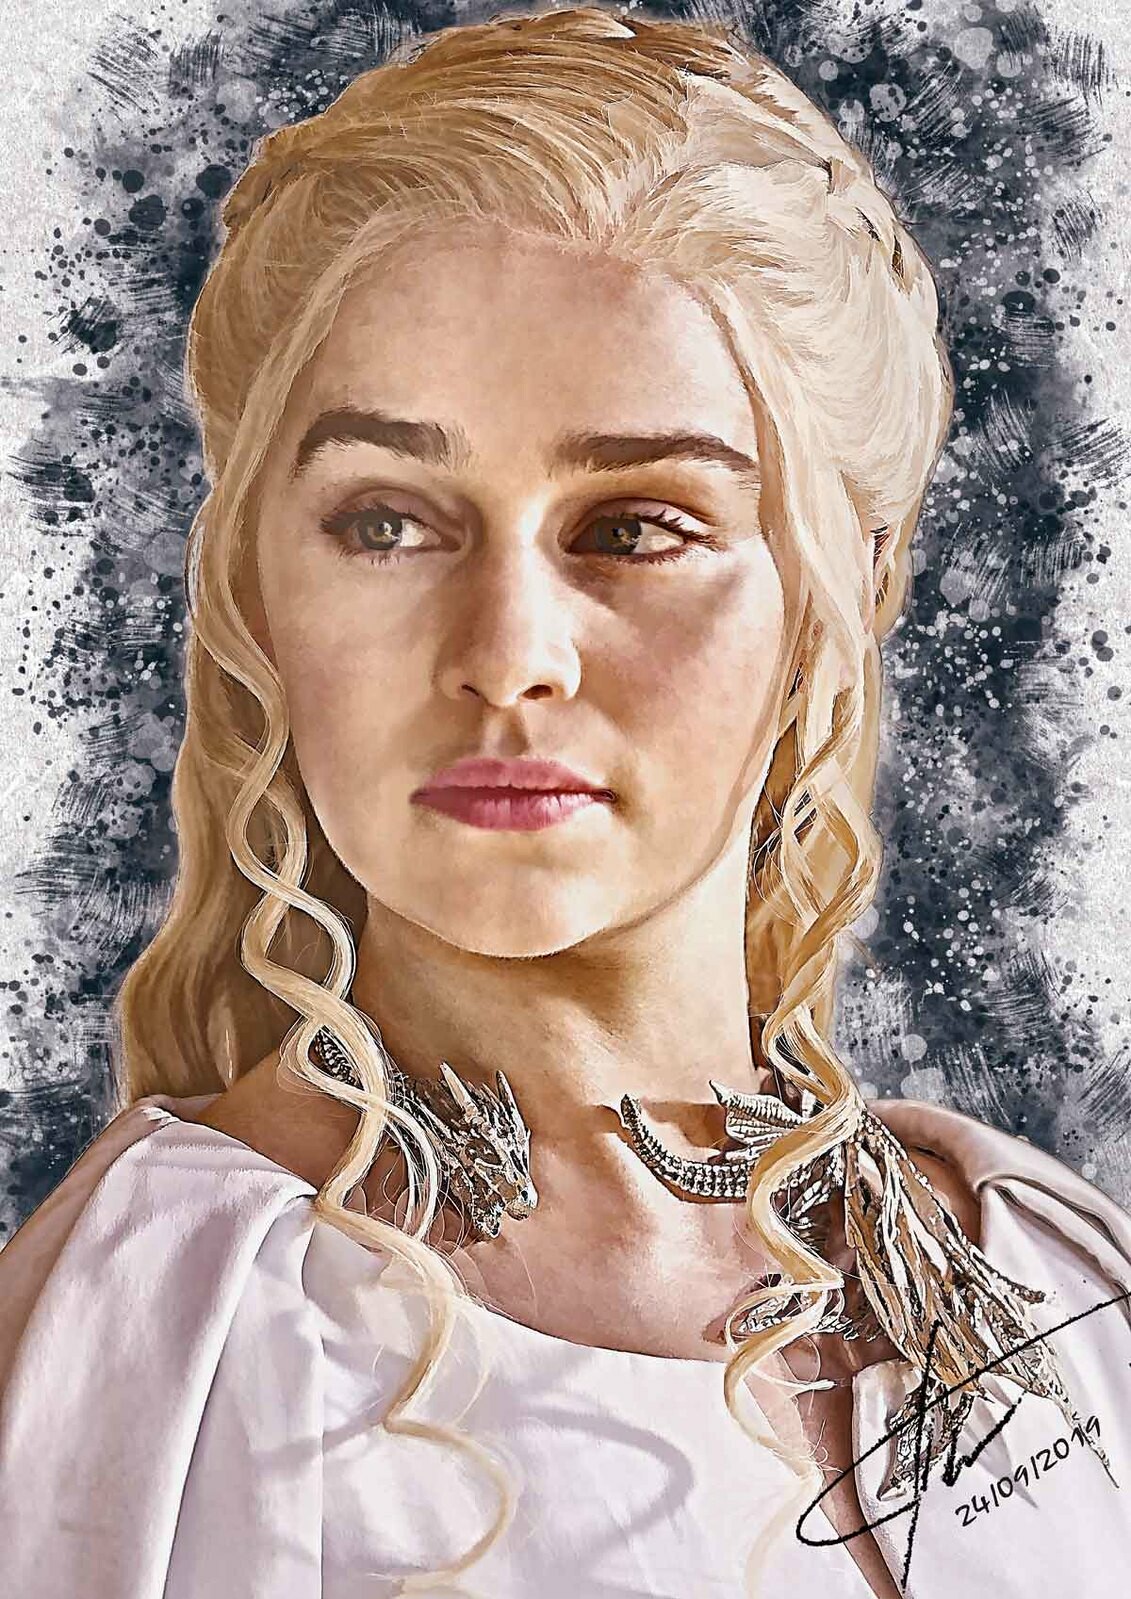 Emilia Clarke Portrait 2019 Wallpapers